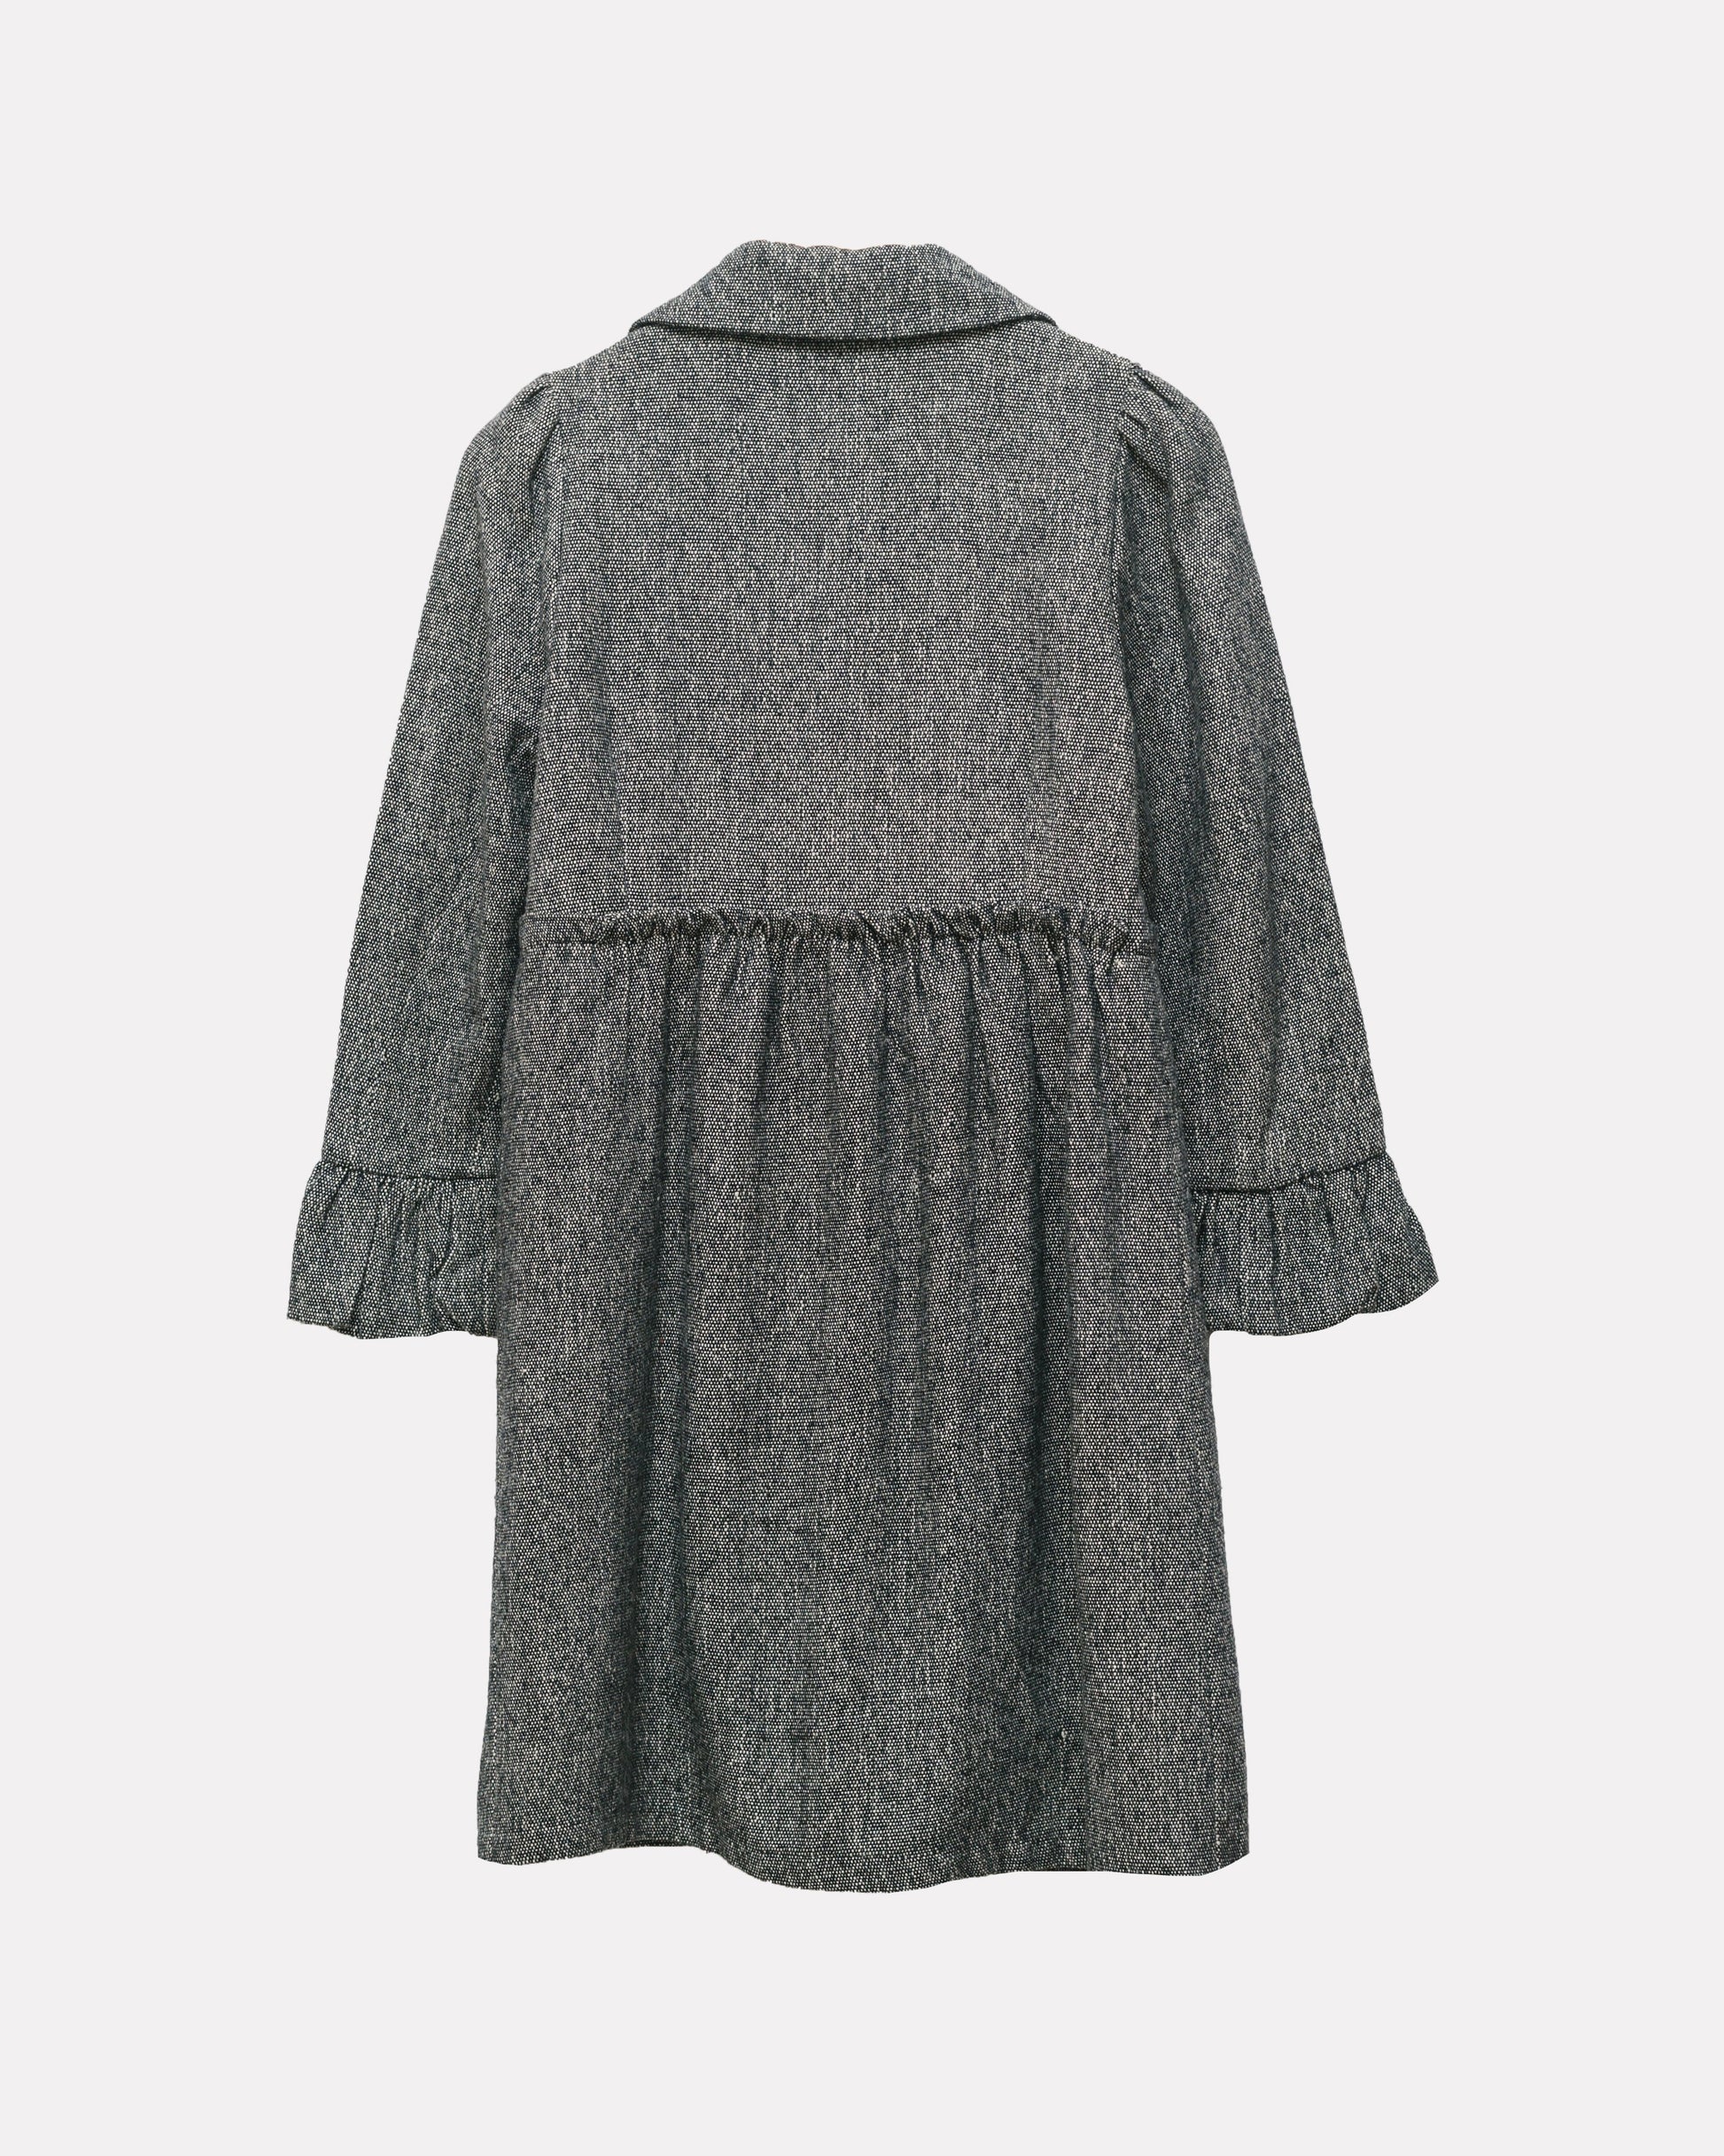 Textured cotton dress coat